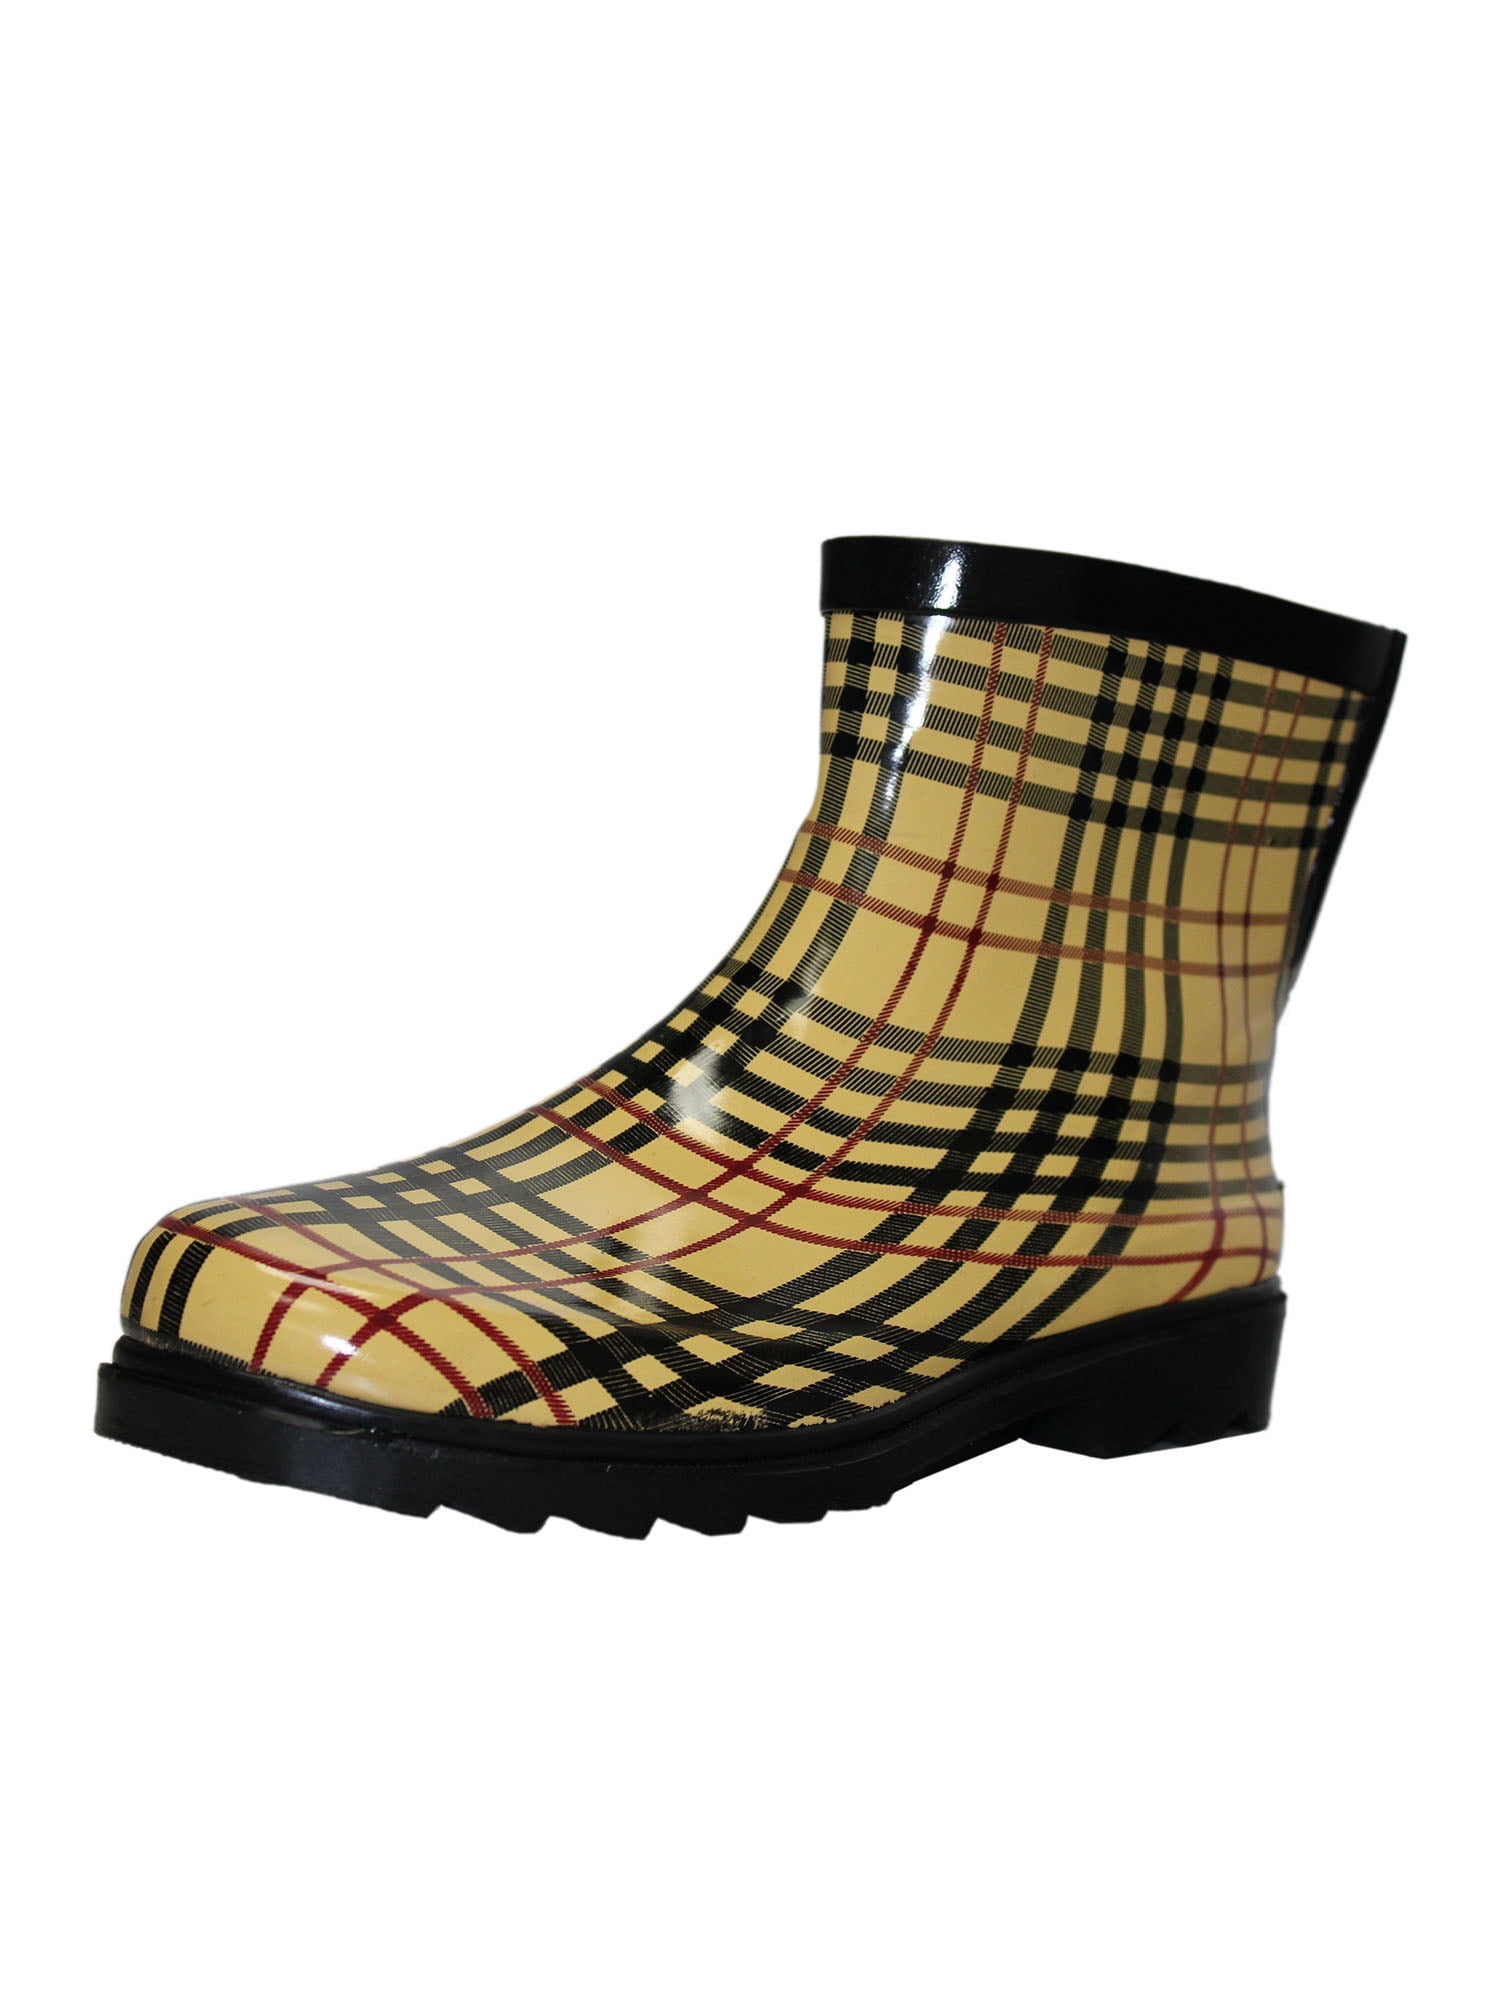 Buy > womens rain boots walmart > in stock